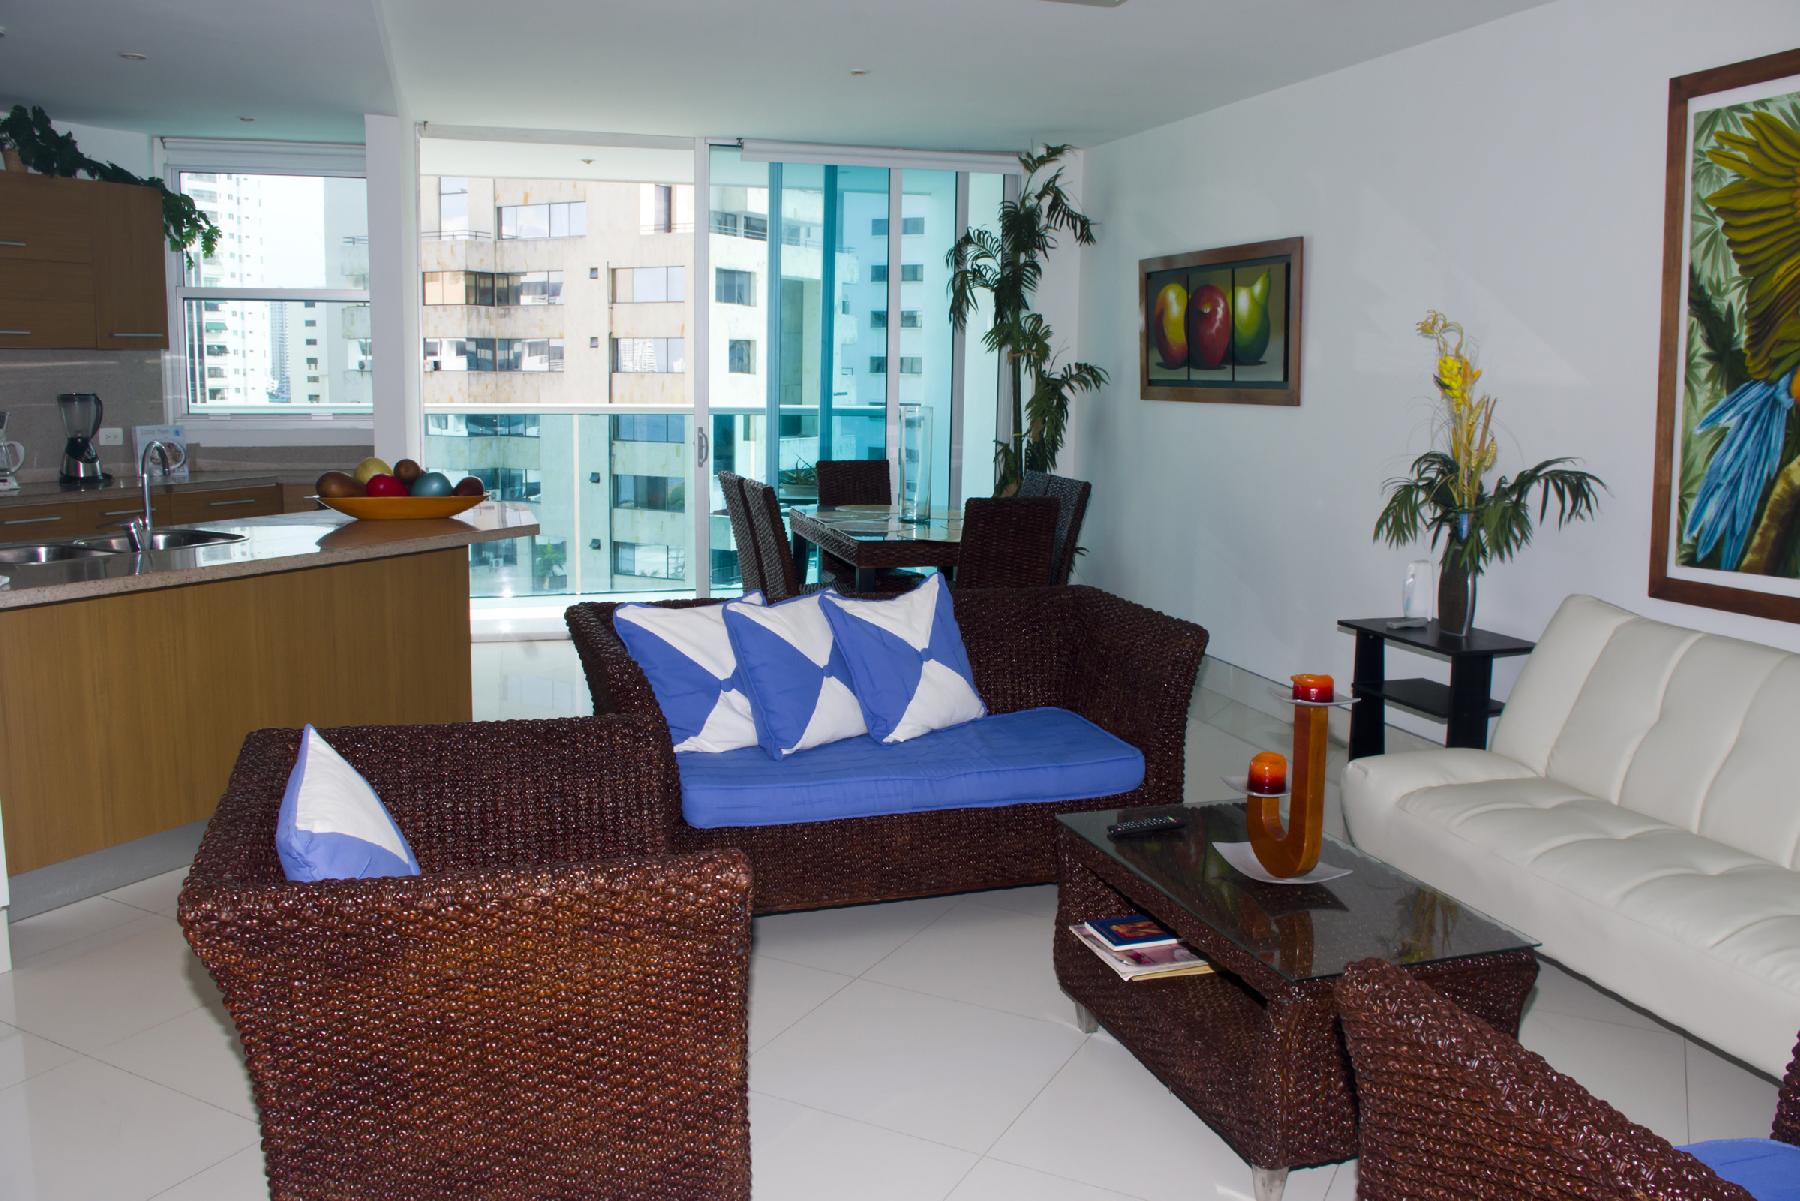 CARTAGENA Bord de mer, Appartement exclusif - Terrazas del Mar - 3 chambres, 3 salles de bain, spacieux appartement familliale